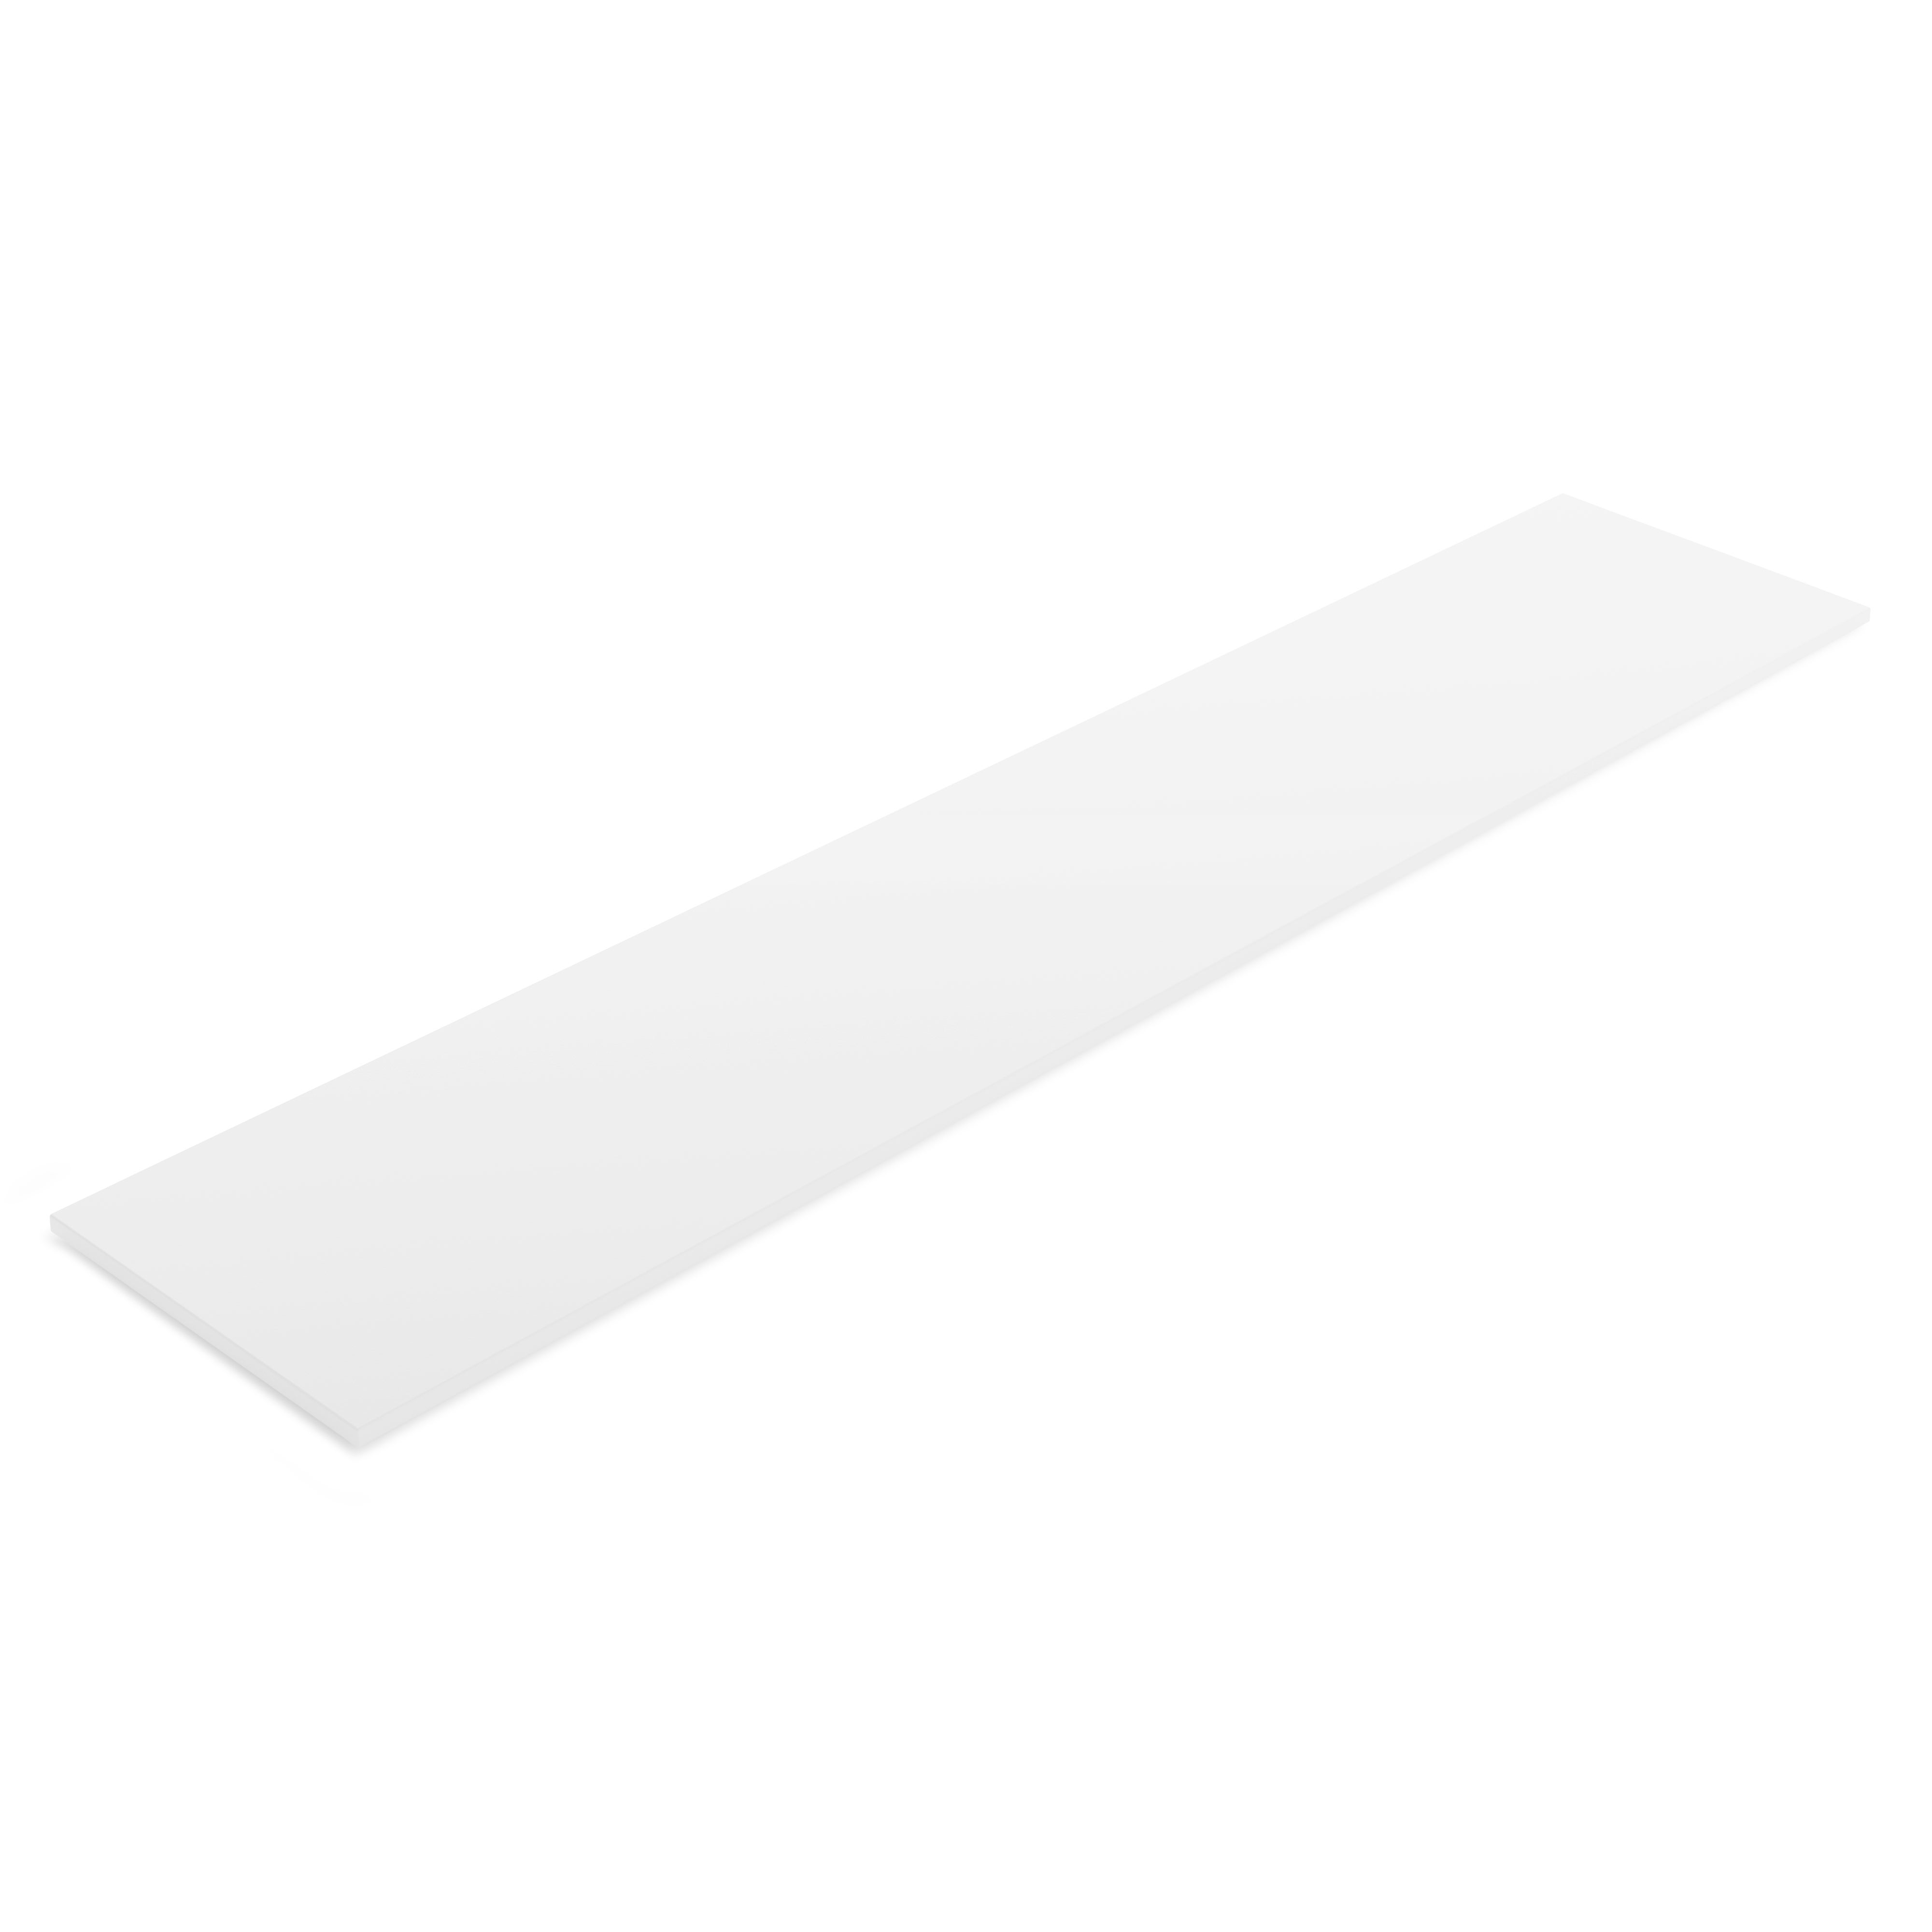 Modular White 180cm Wooden Shelf Panel Component